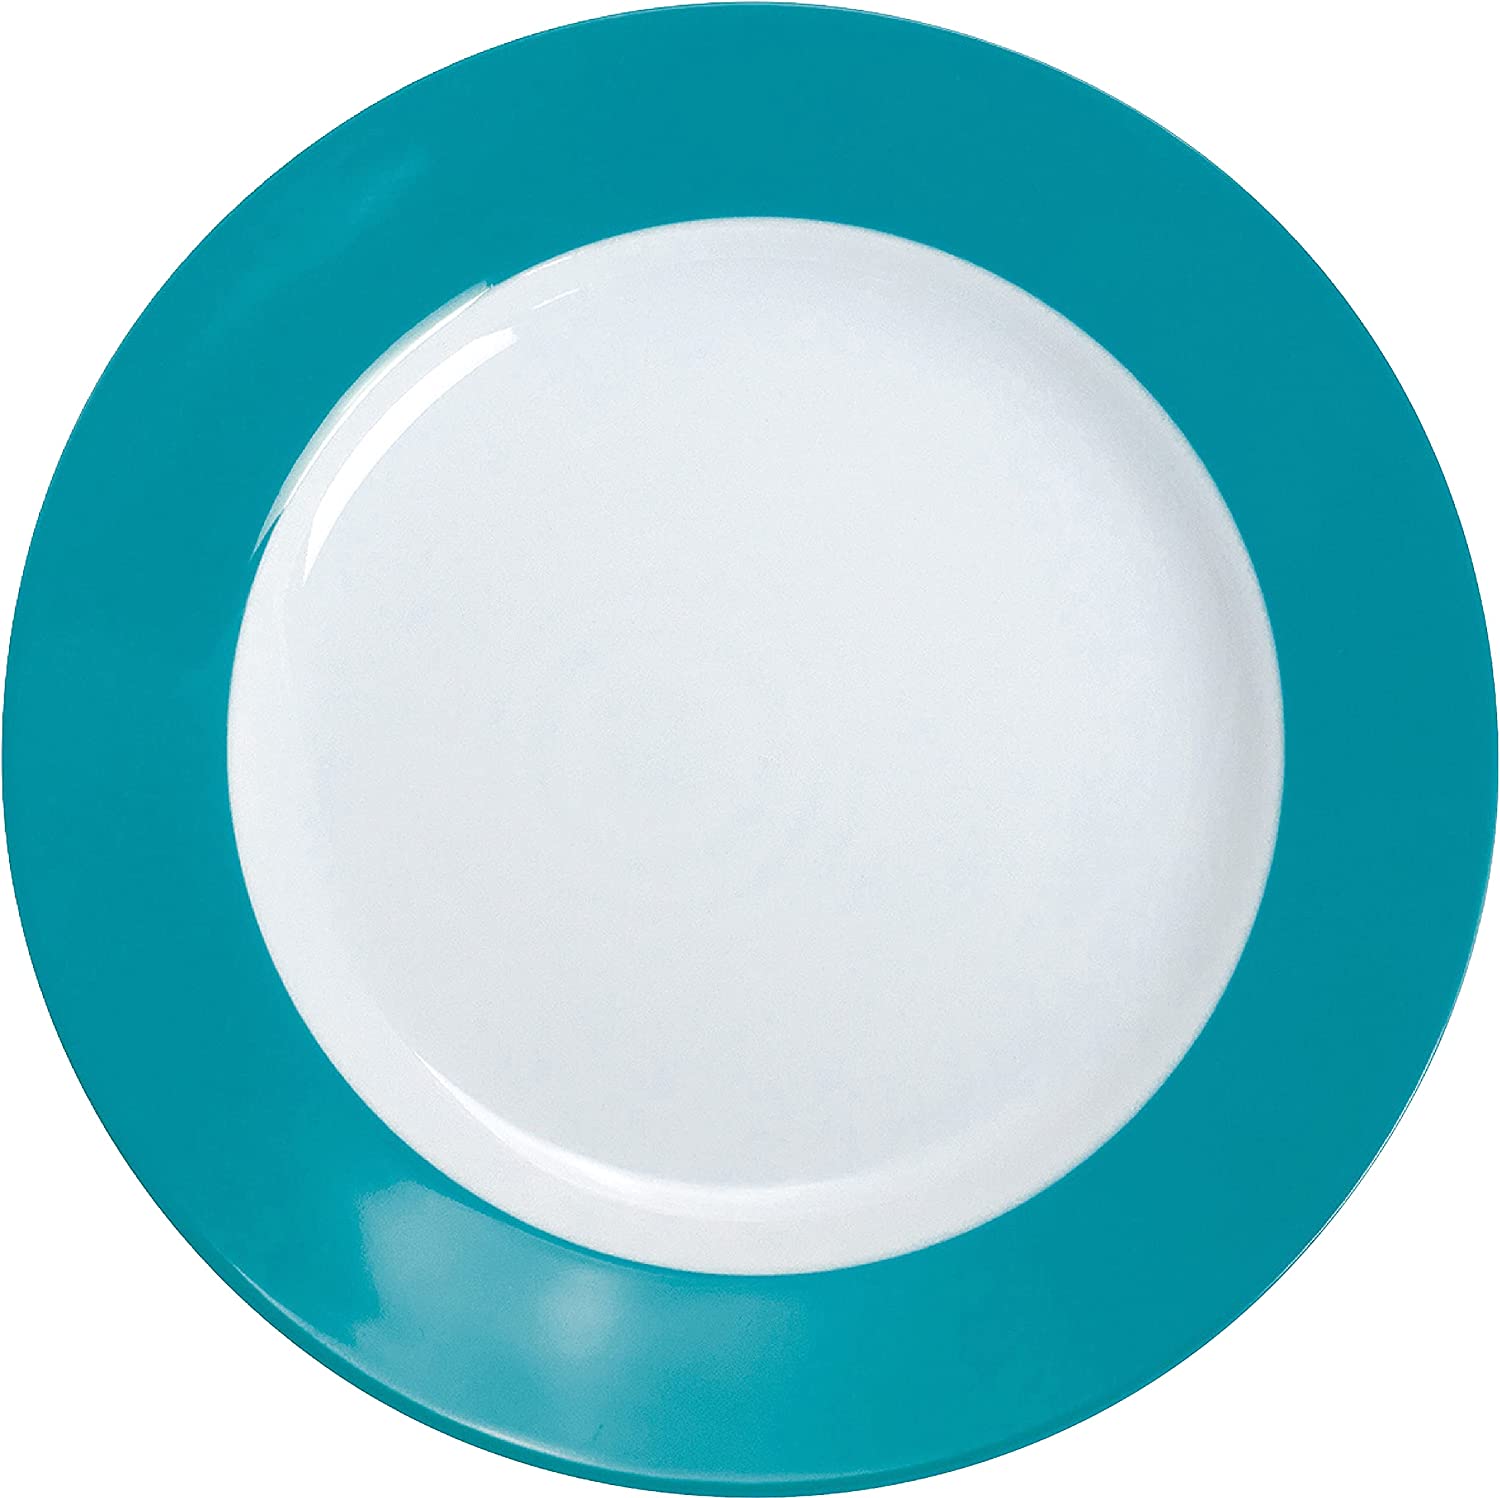 Kahla Pronto Colore Dinner Plate, Petrol, 20.5 cm, 573447A72216C